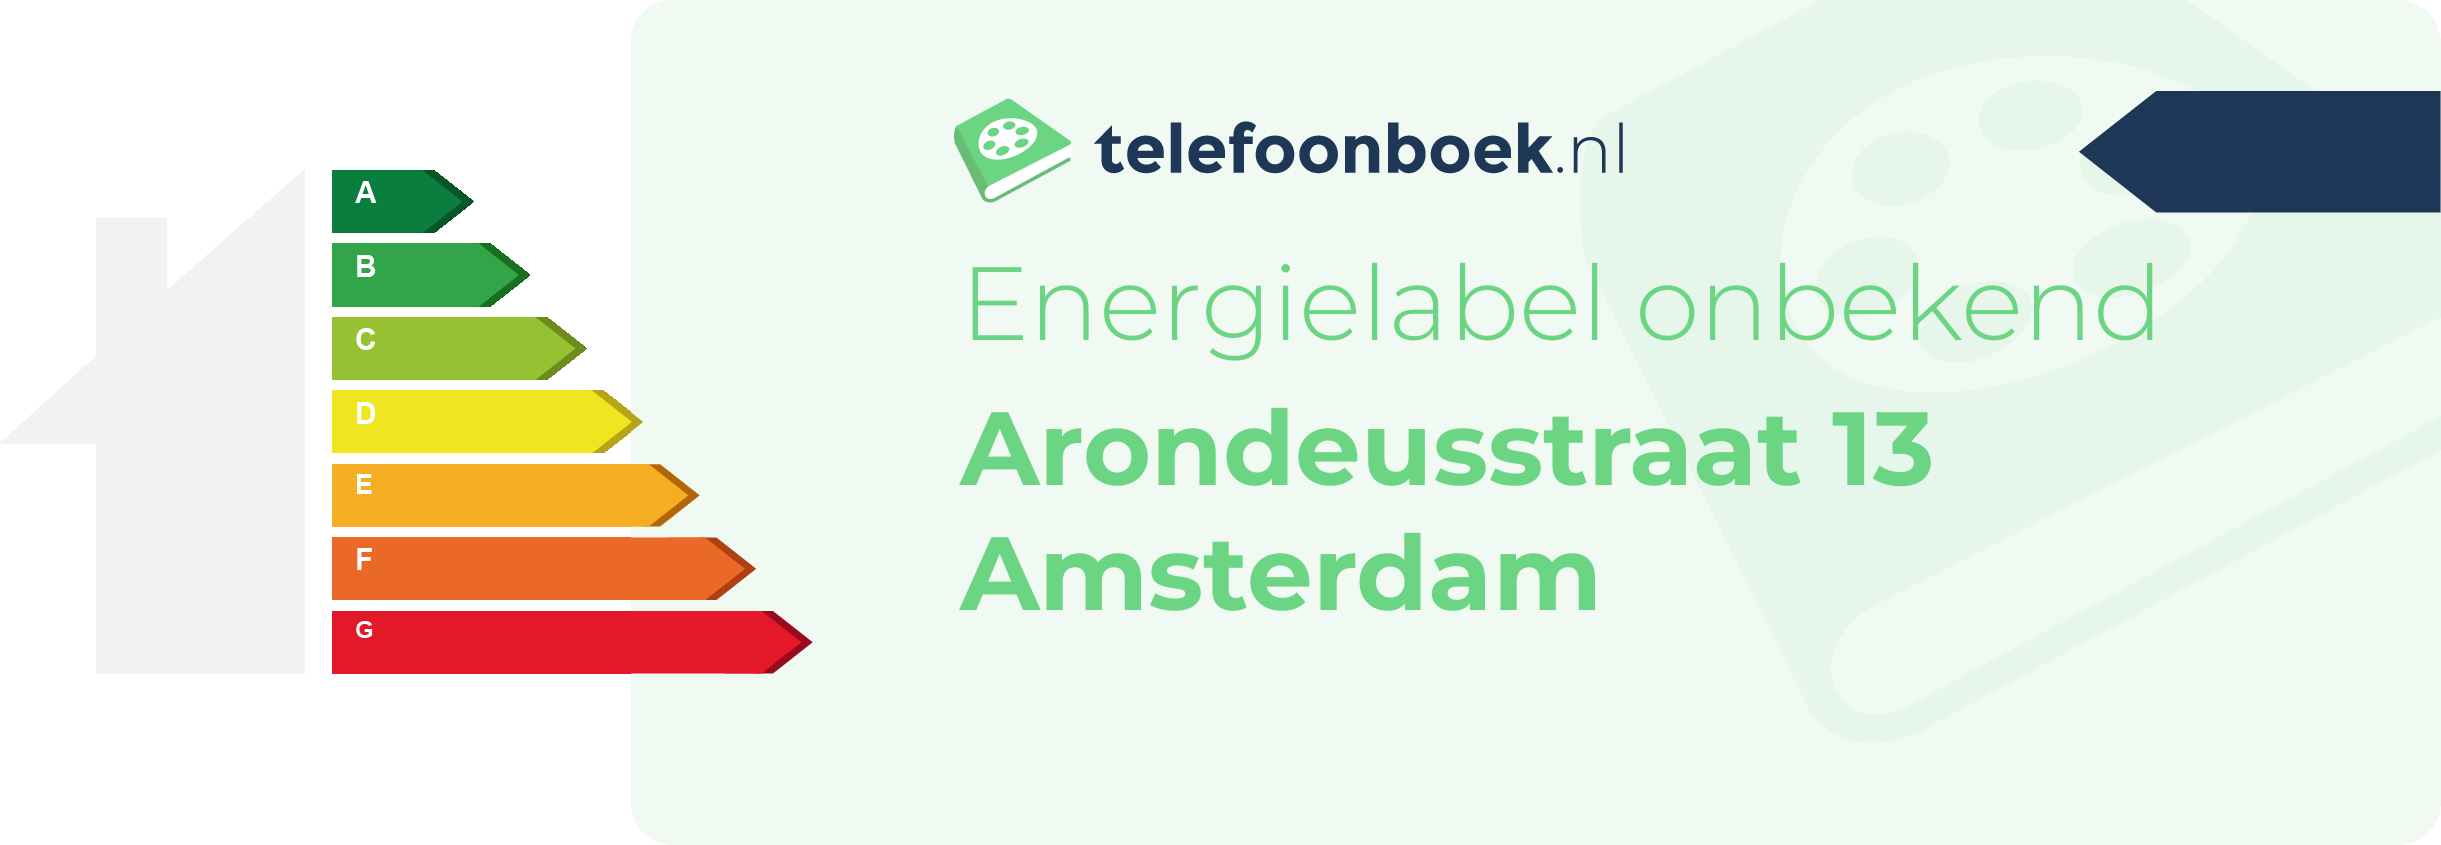 Energielabel Arondeusstraat 13 Amsterdam